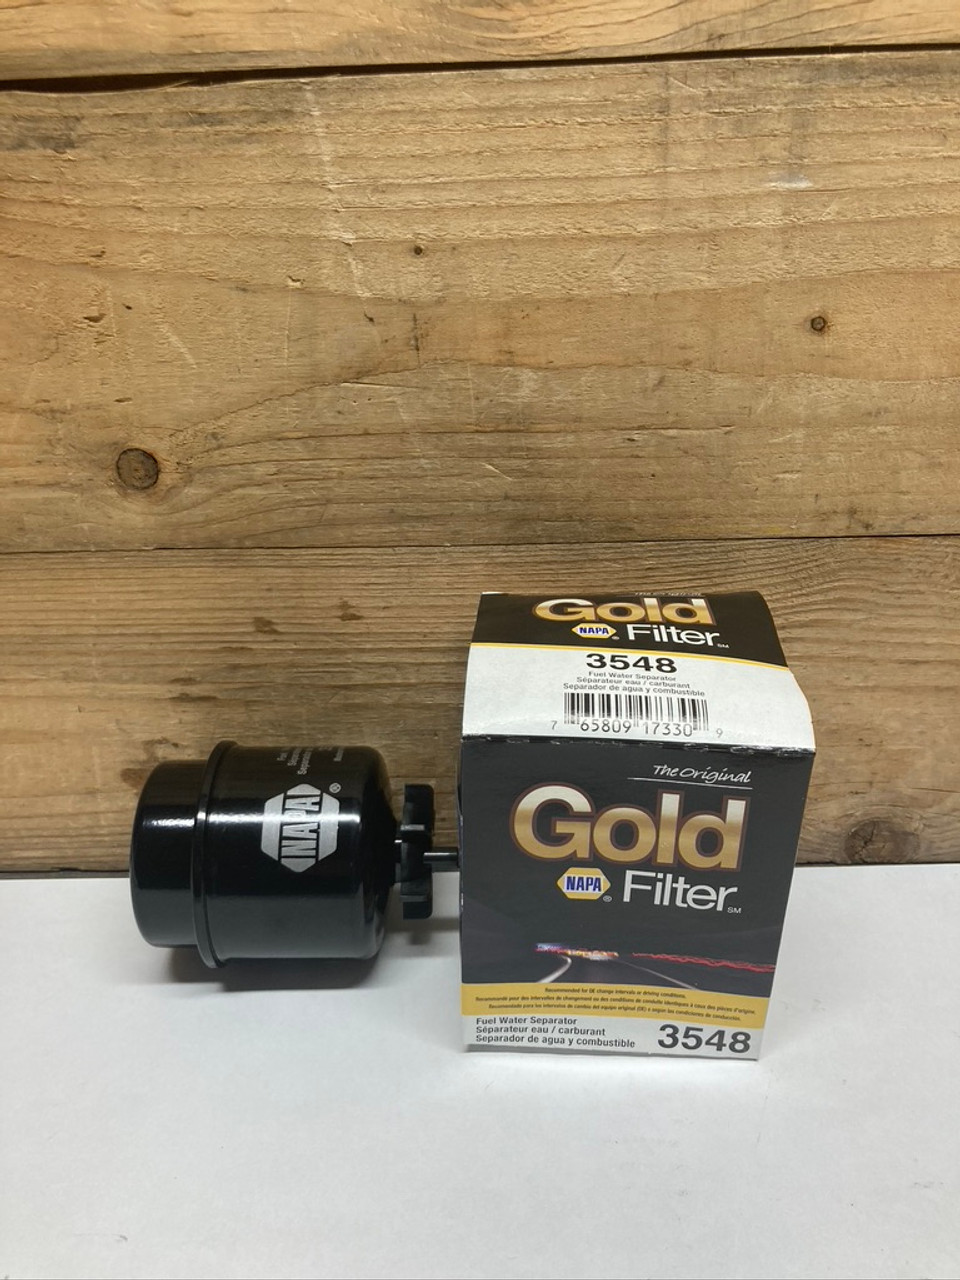 Napa Gold 3548 Fuel Water Separator Filter Lot of 6